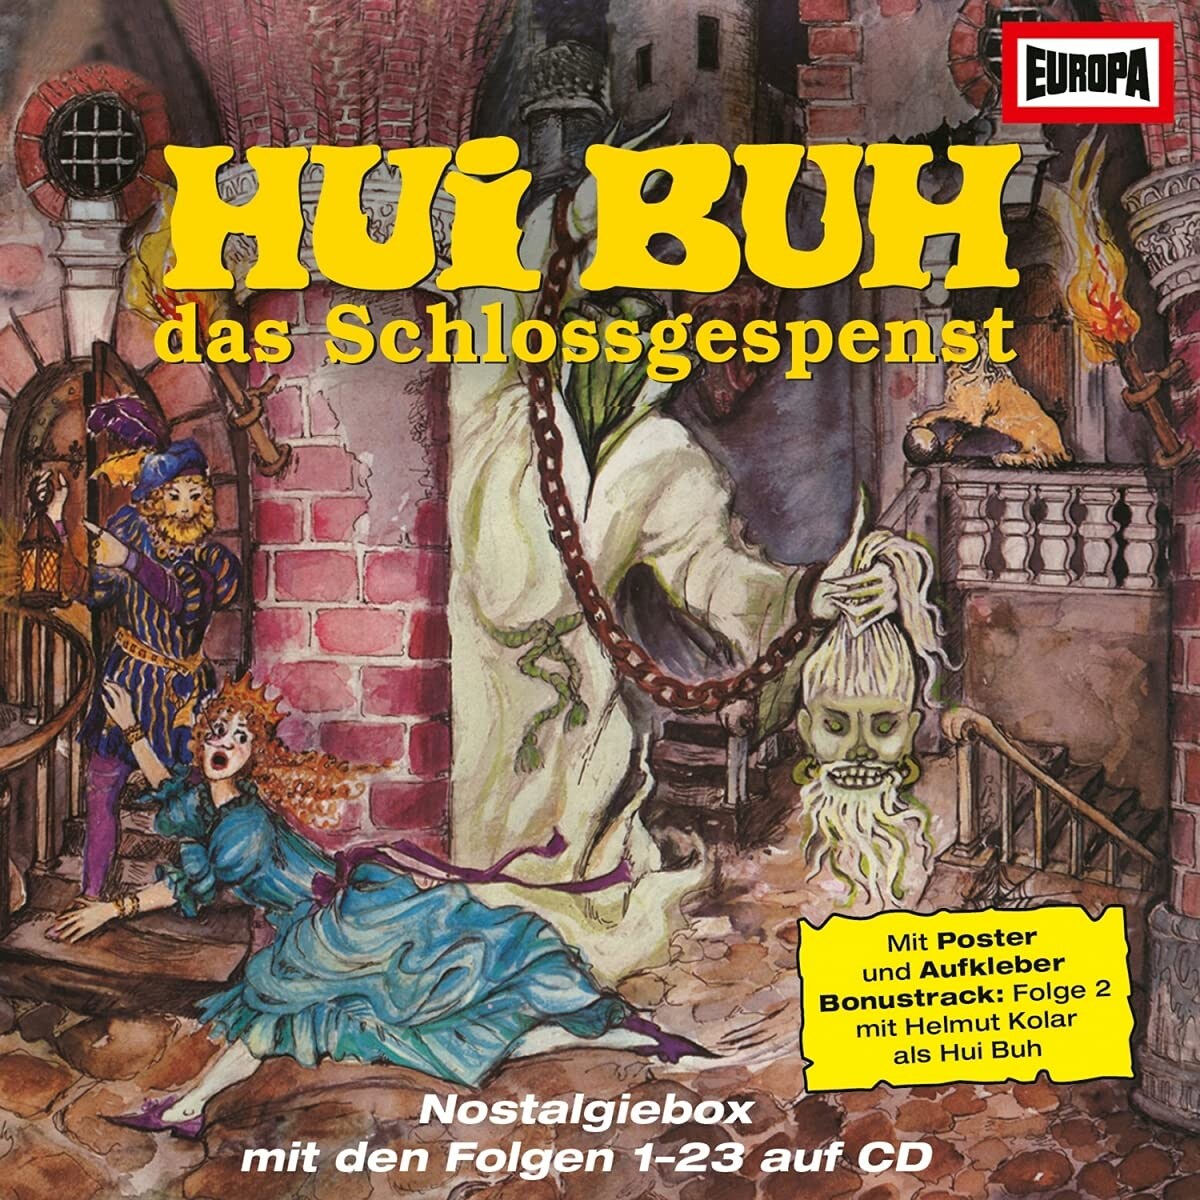 Europa (Sony Music) CD-Box Hui Buh das Schlossgespenst -  Nostalgi...